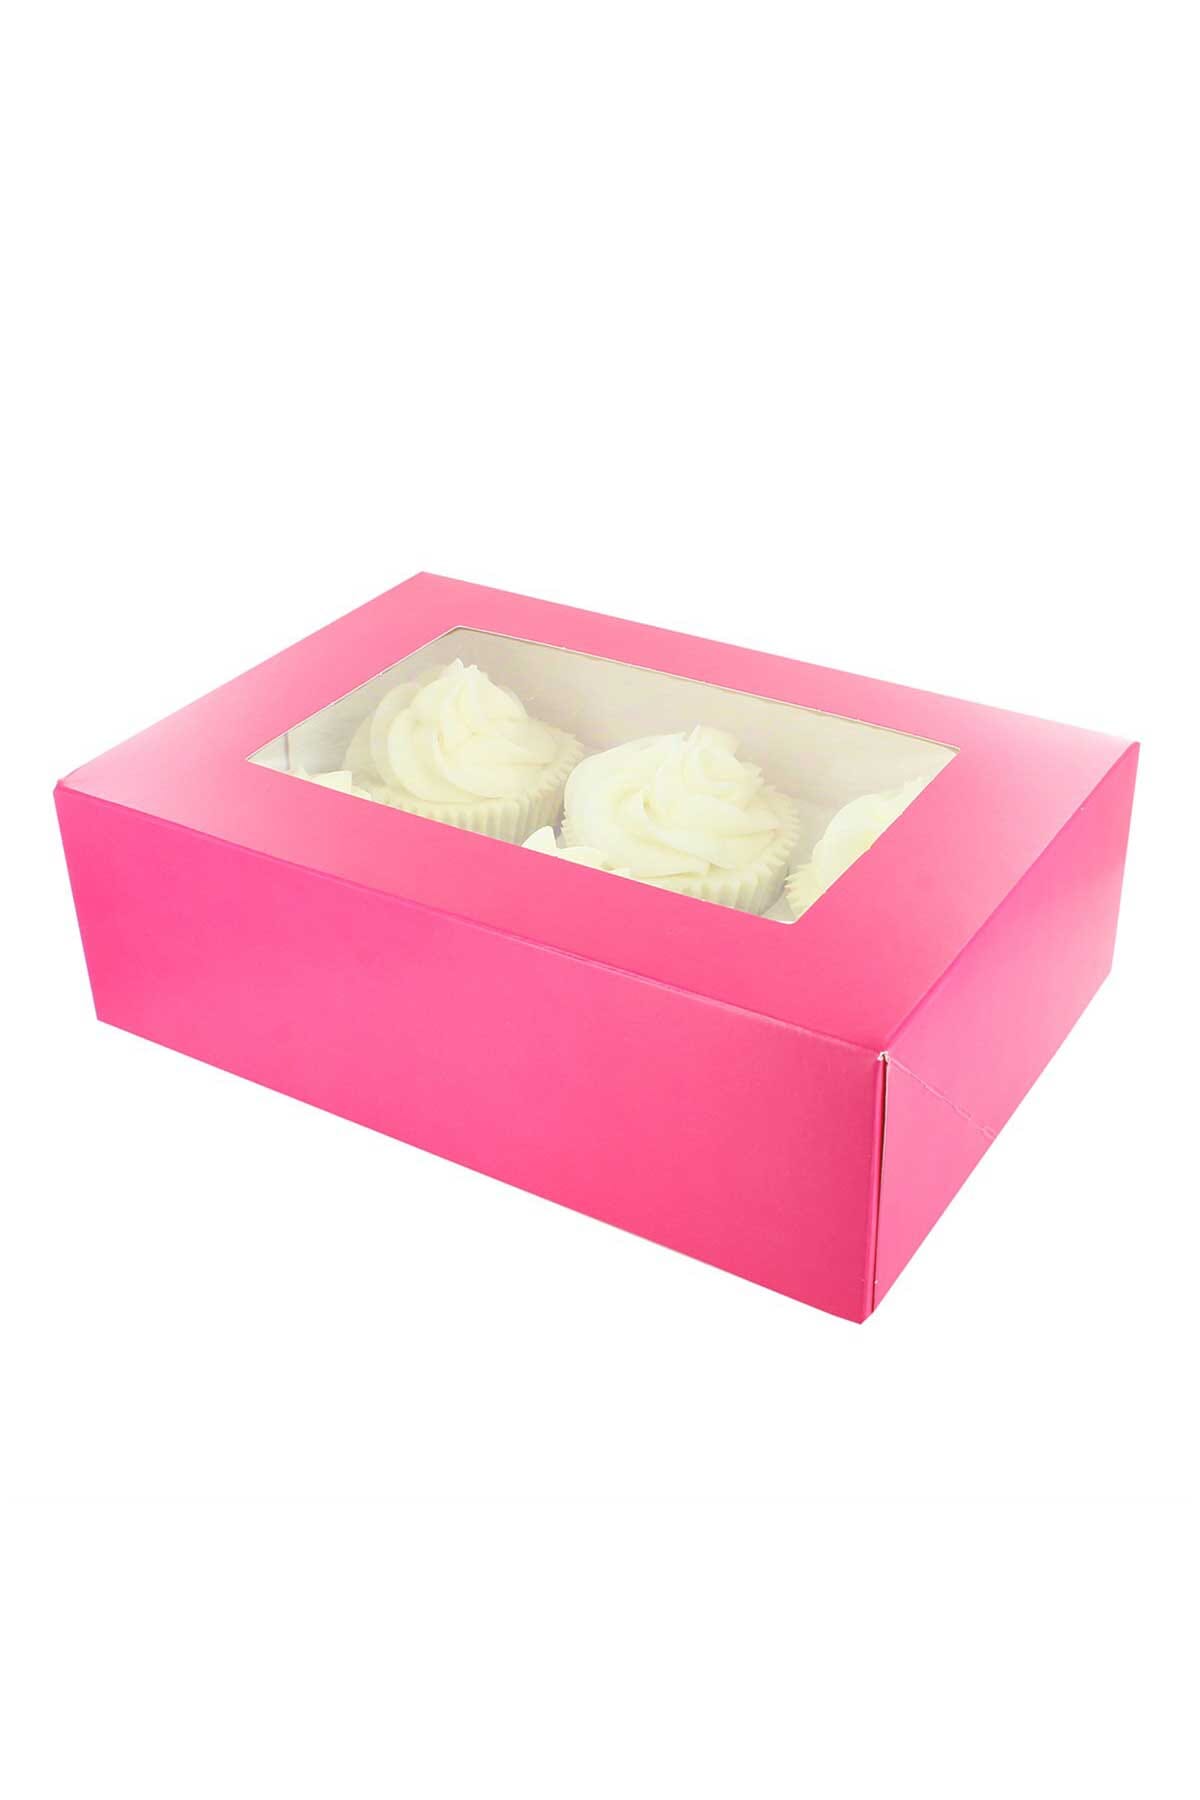 6 Hole Cupcake Box - Hot Pink Cake Box Sprinkly 